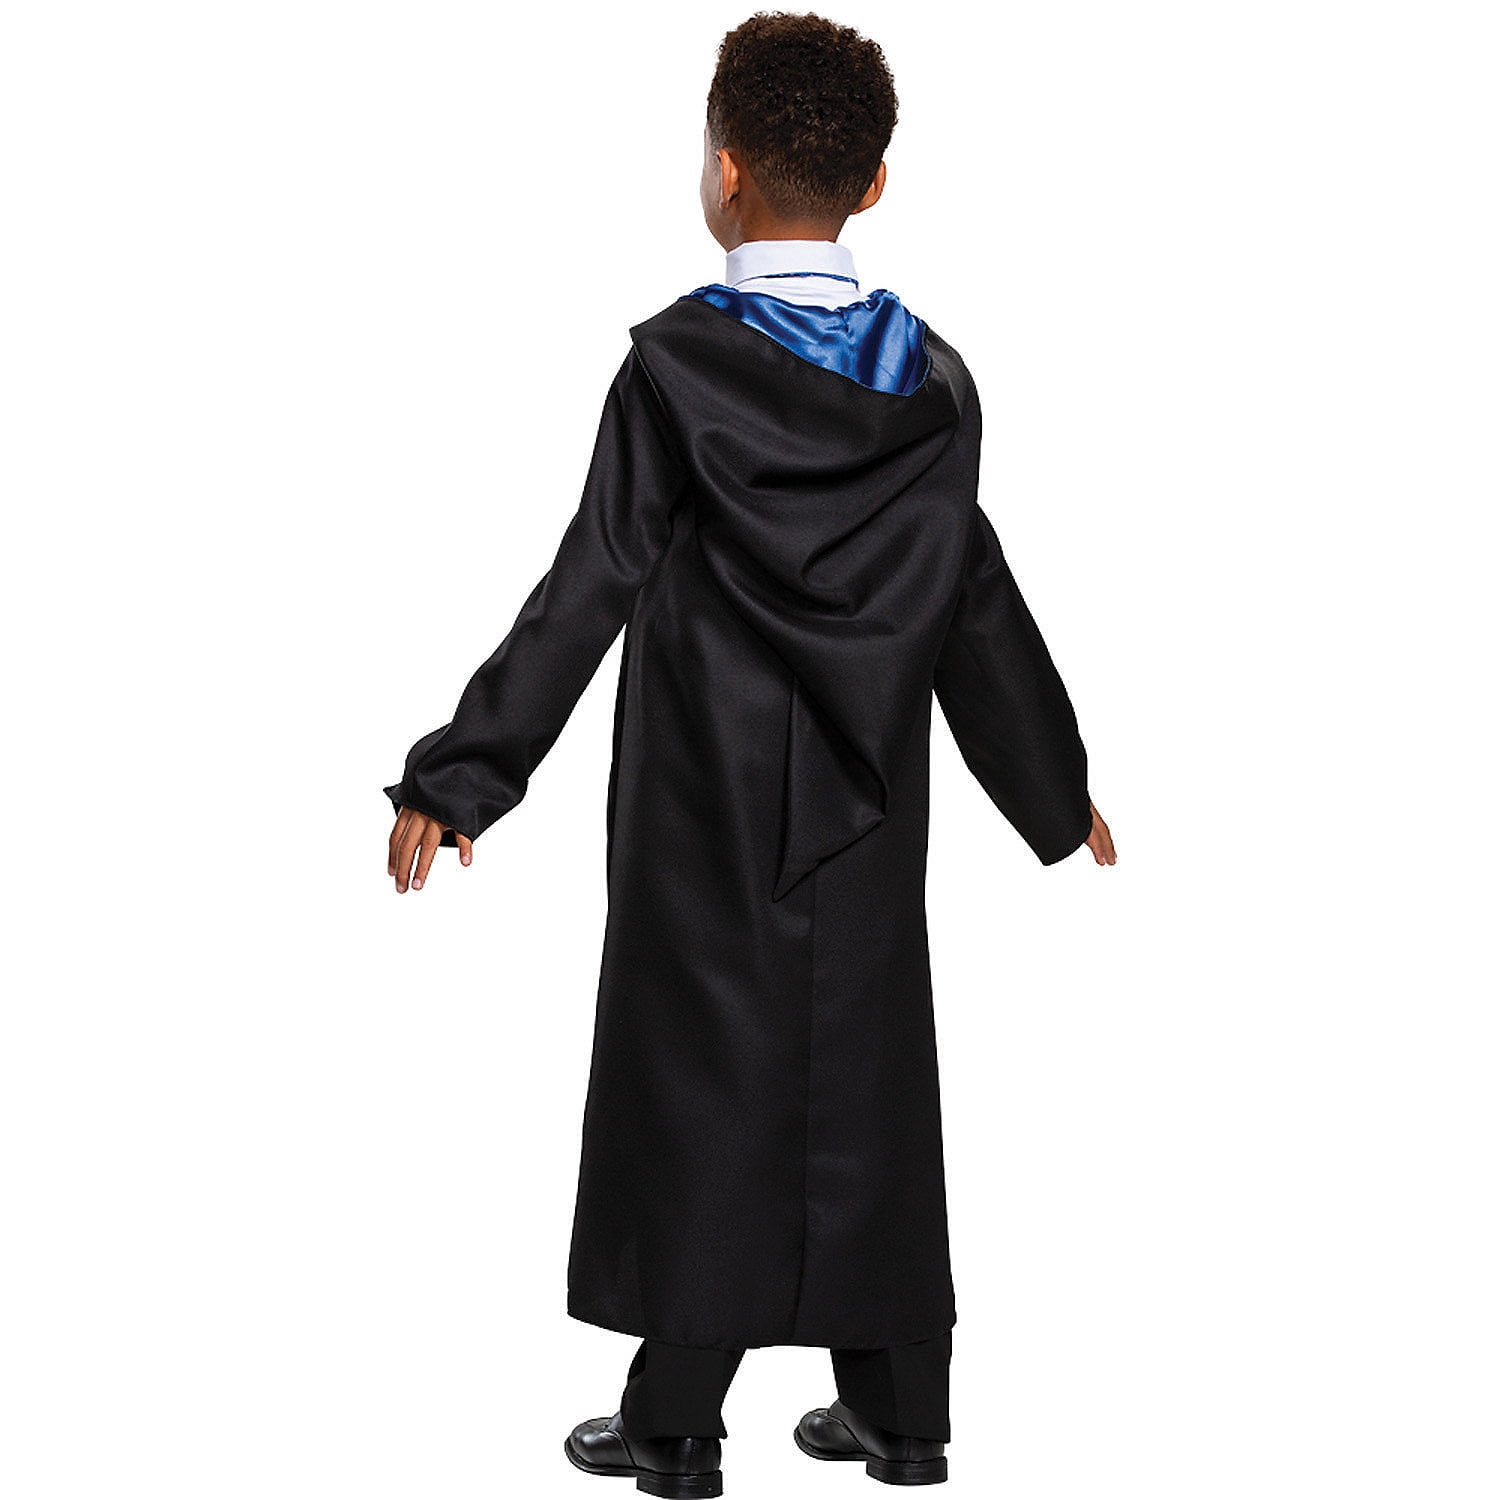 Harry Potter Ravenclaw Robe Prestige Child Costume, Large (10-12)